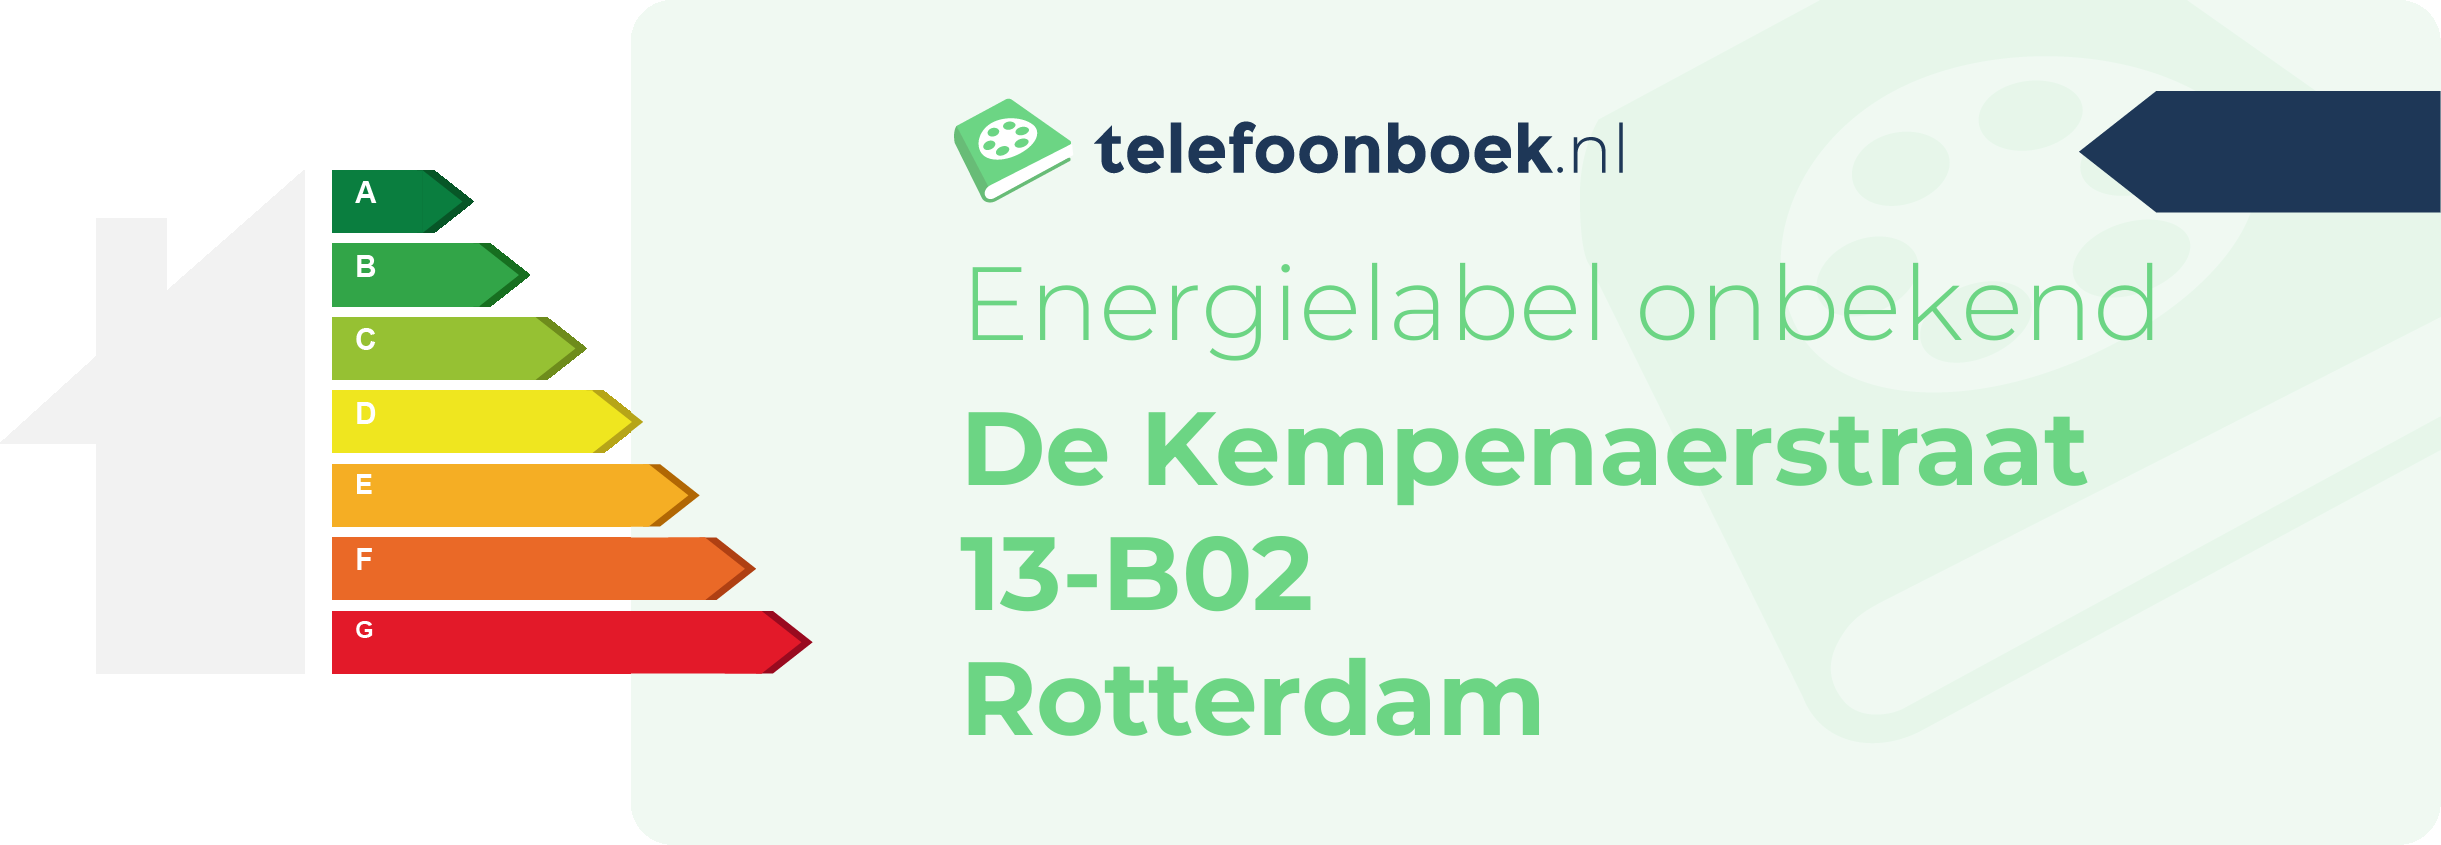 Energielabel De Kempenaerstraat 13-B02 Rotterdam